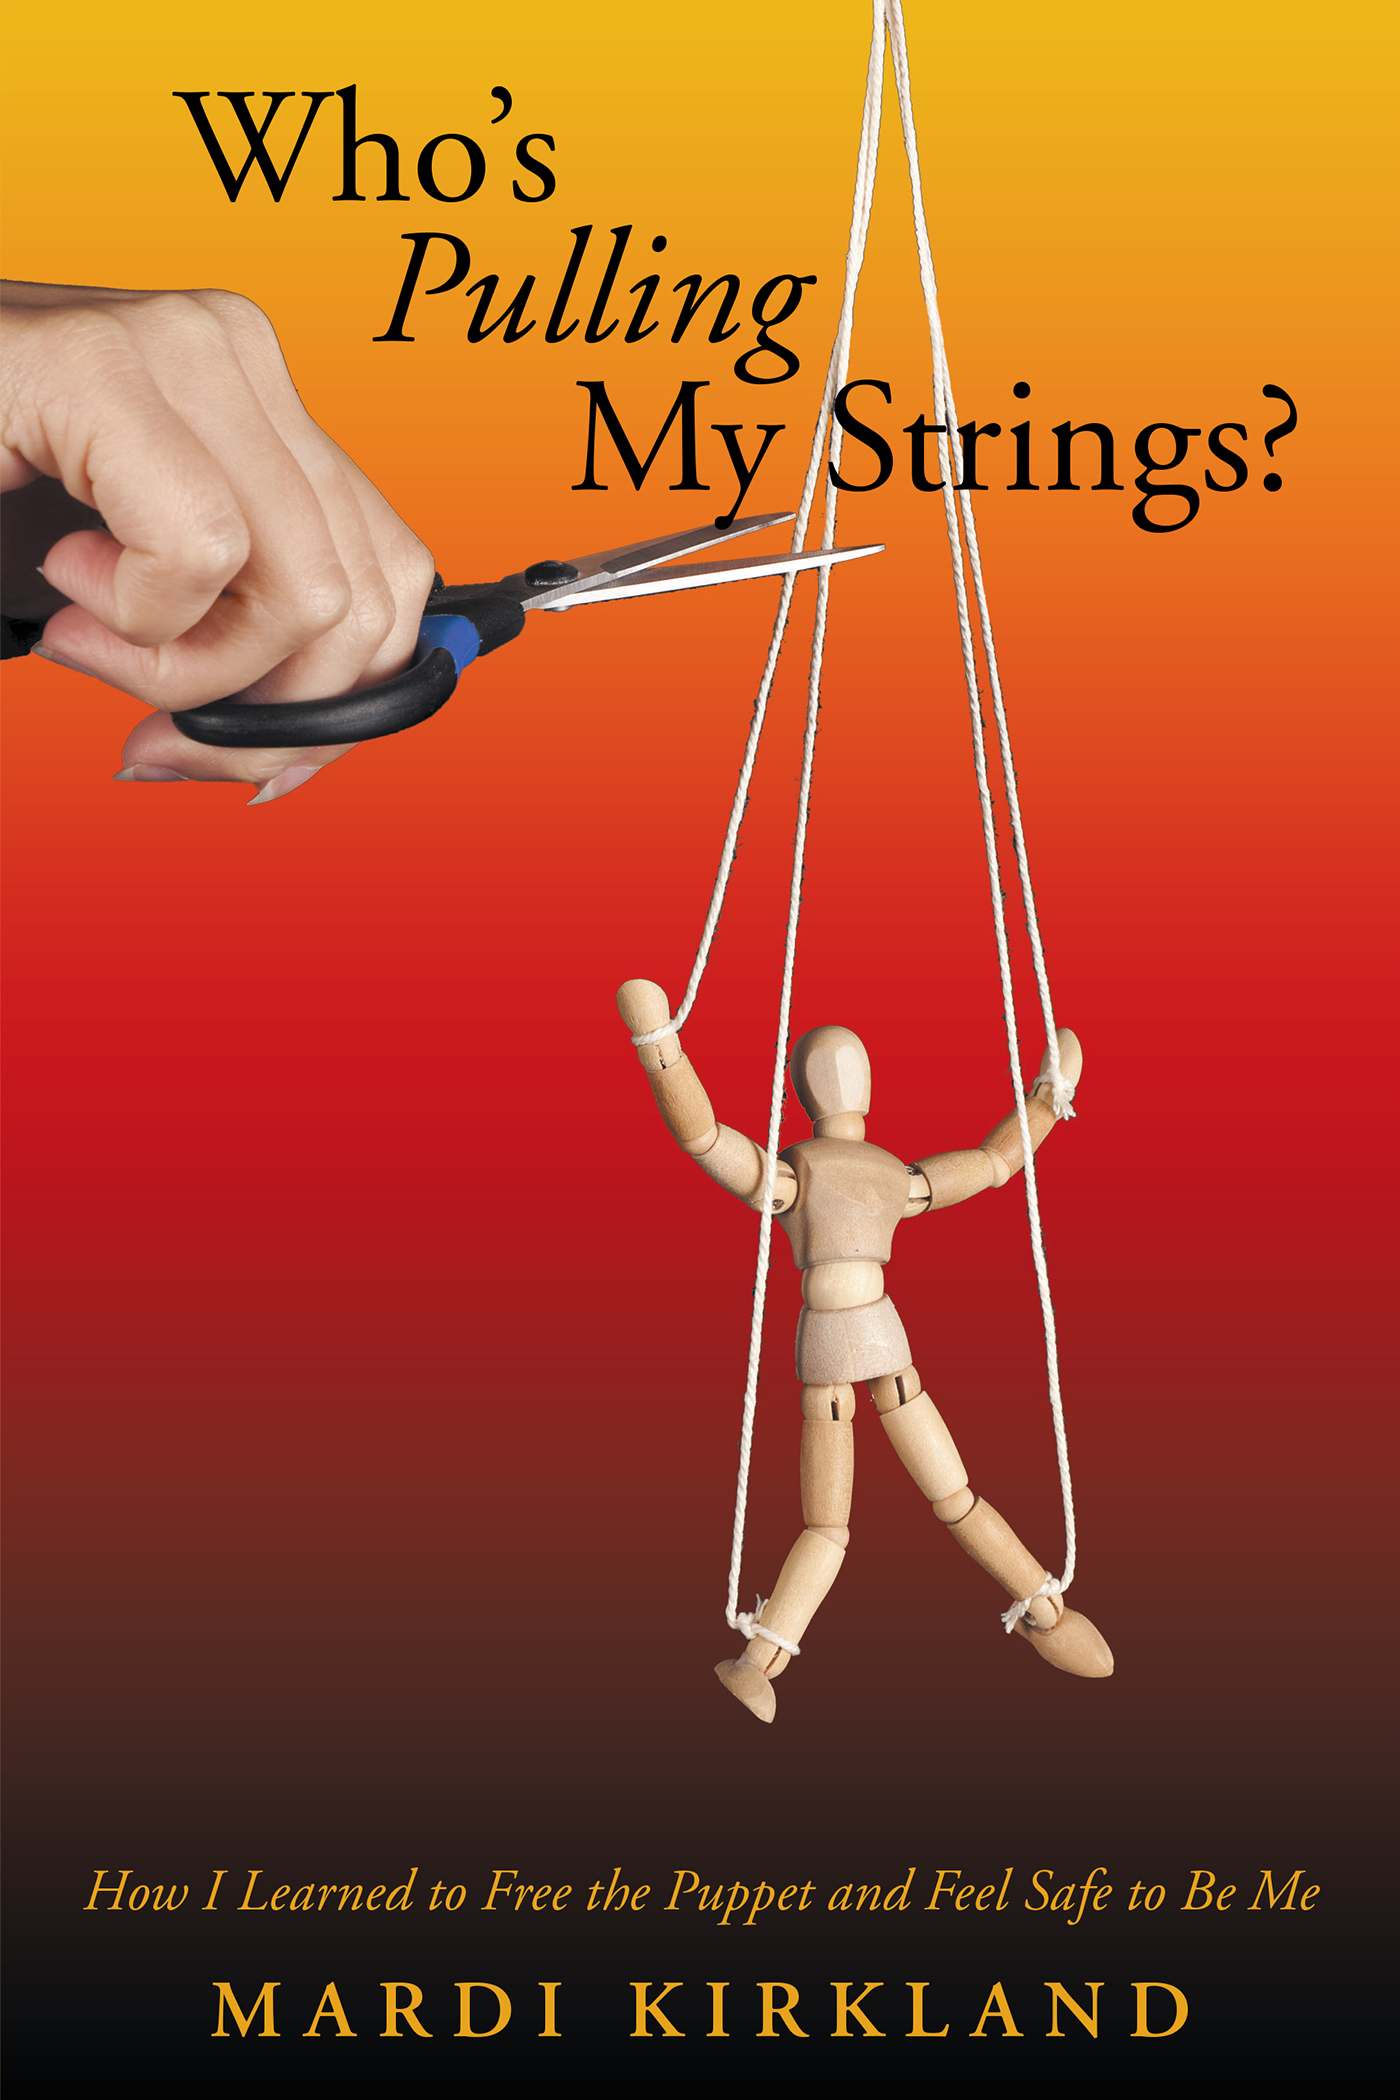 puppet string holder